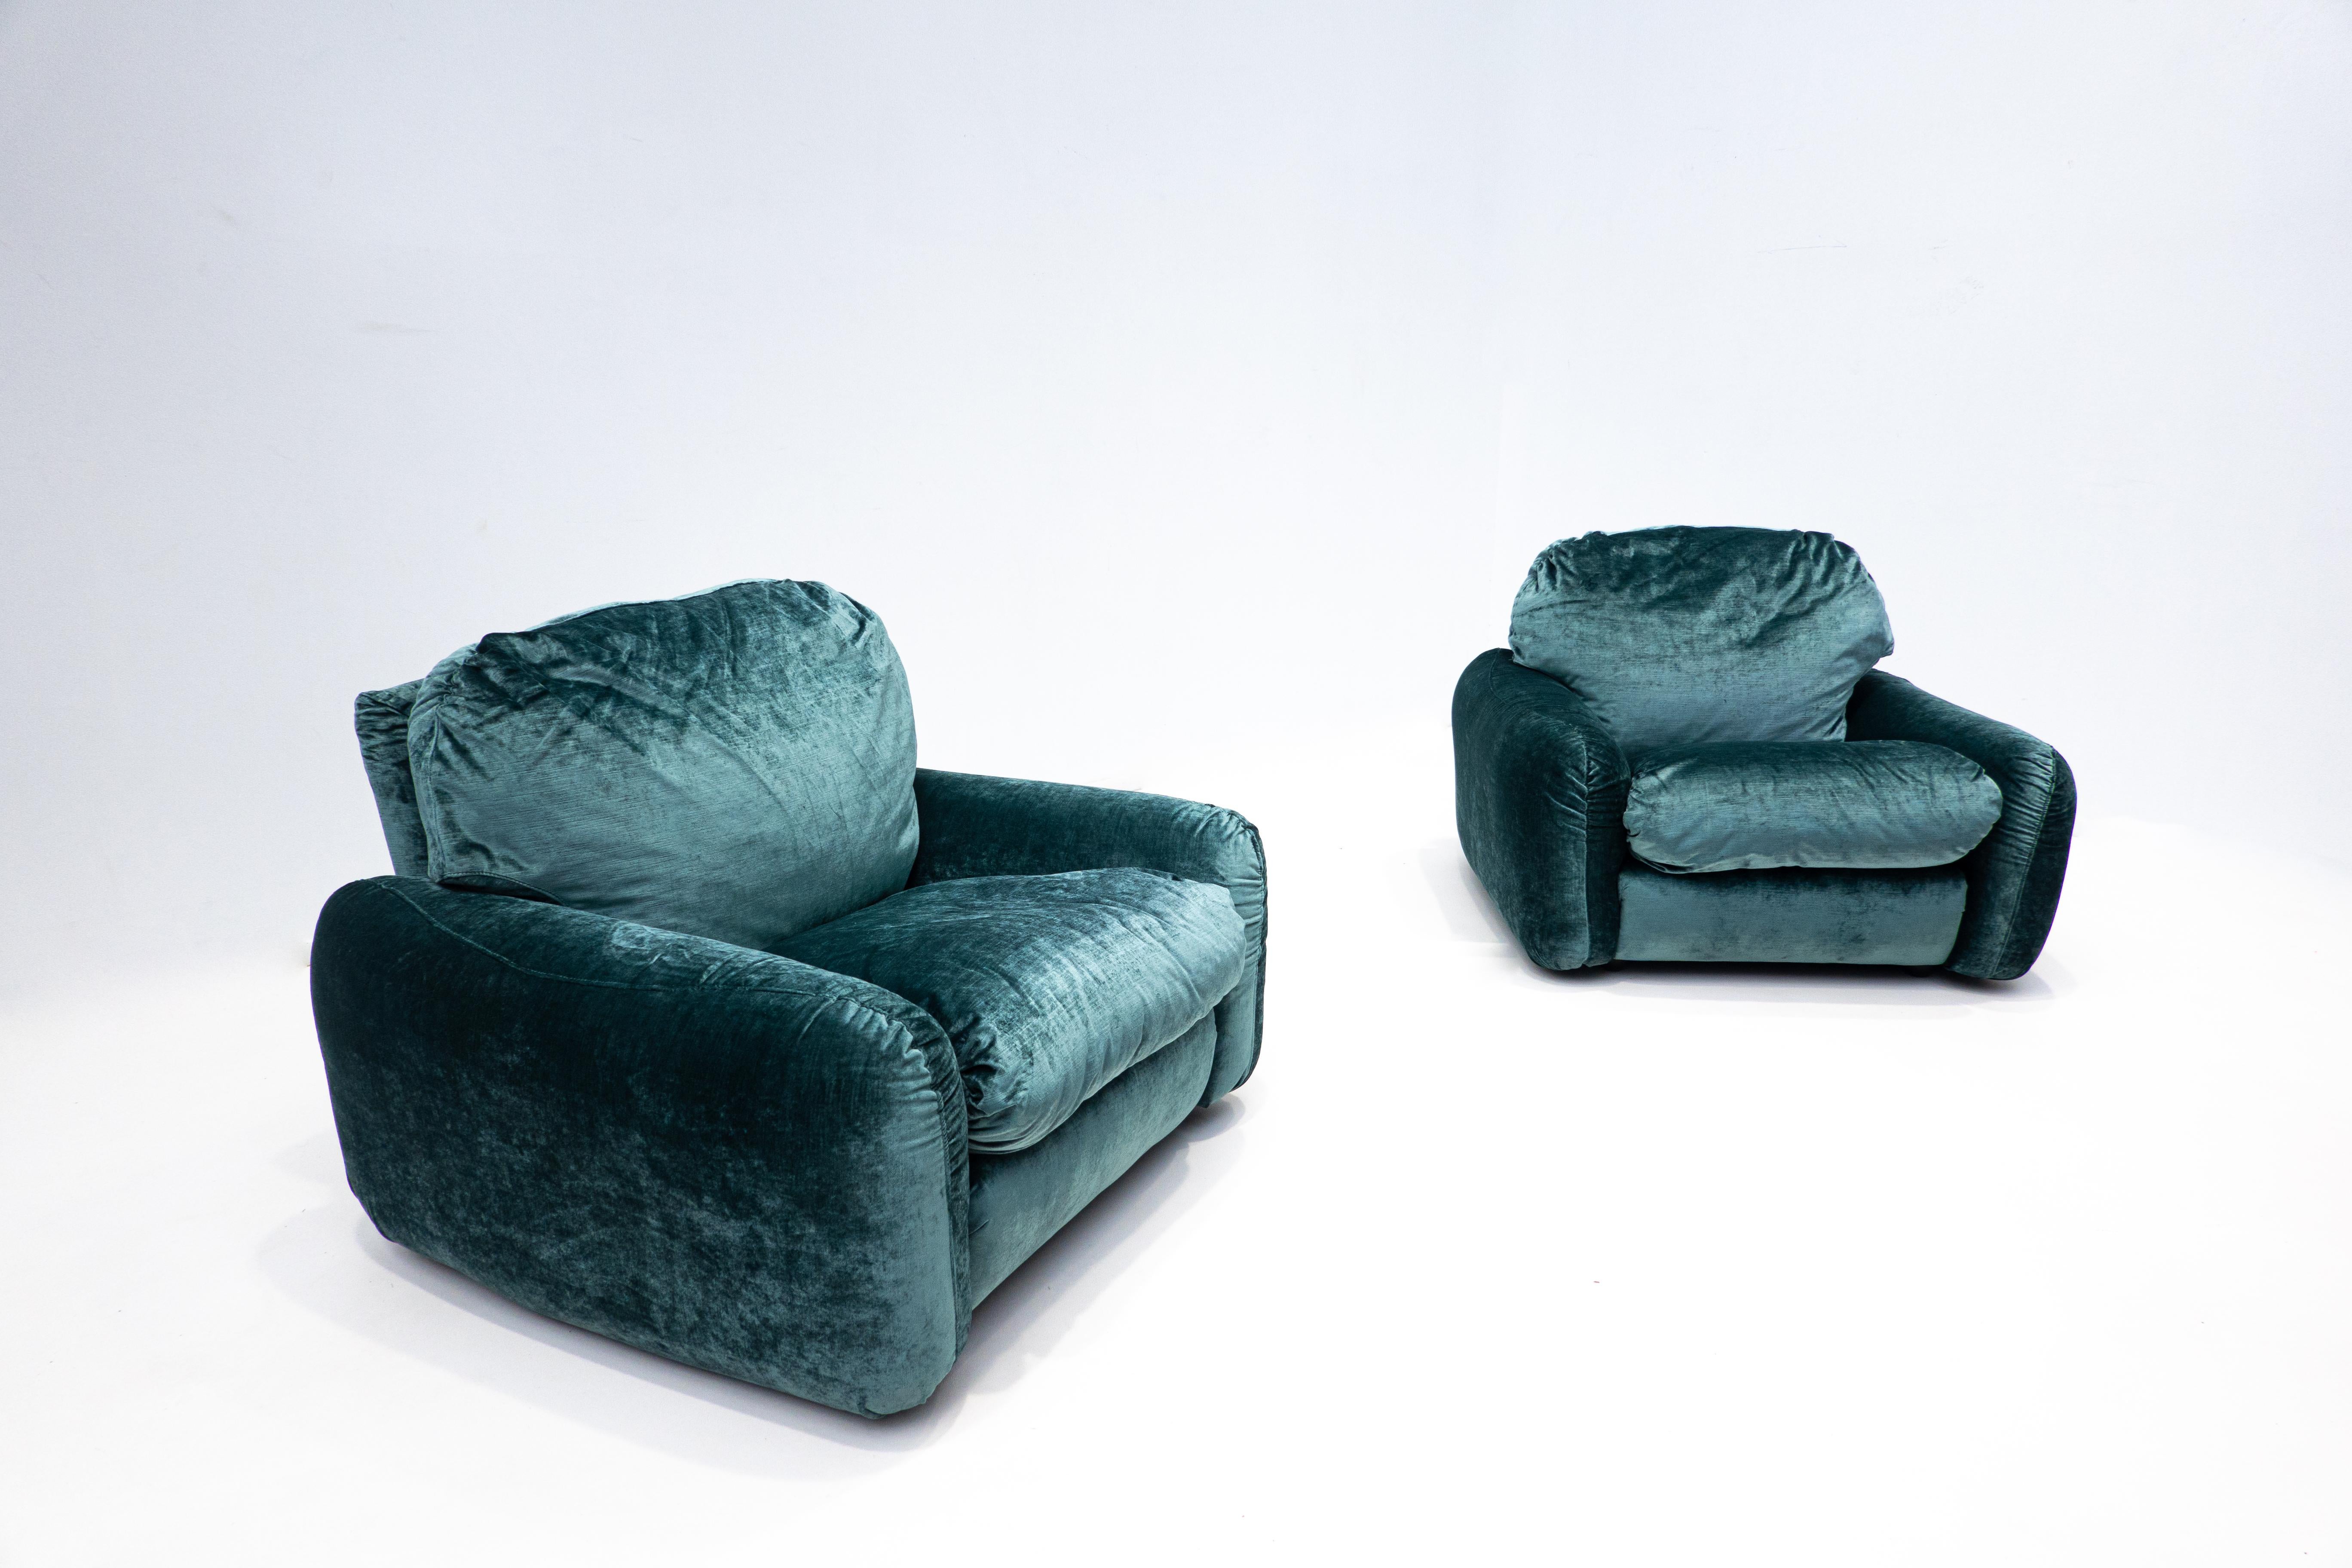 Pair of mid-century green velvet armchairs - Italy 1960s.